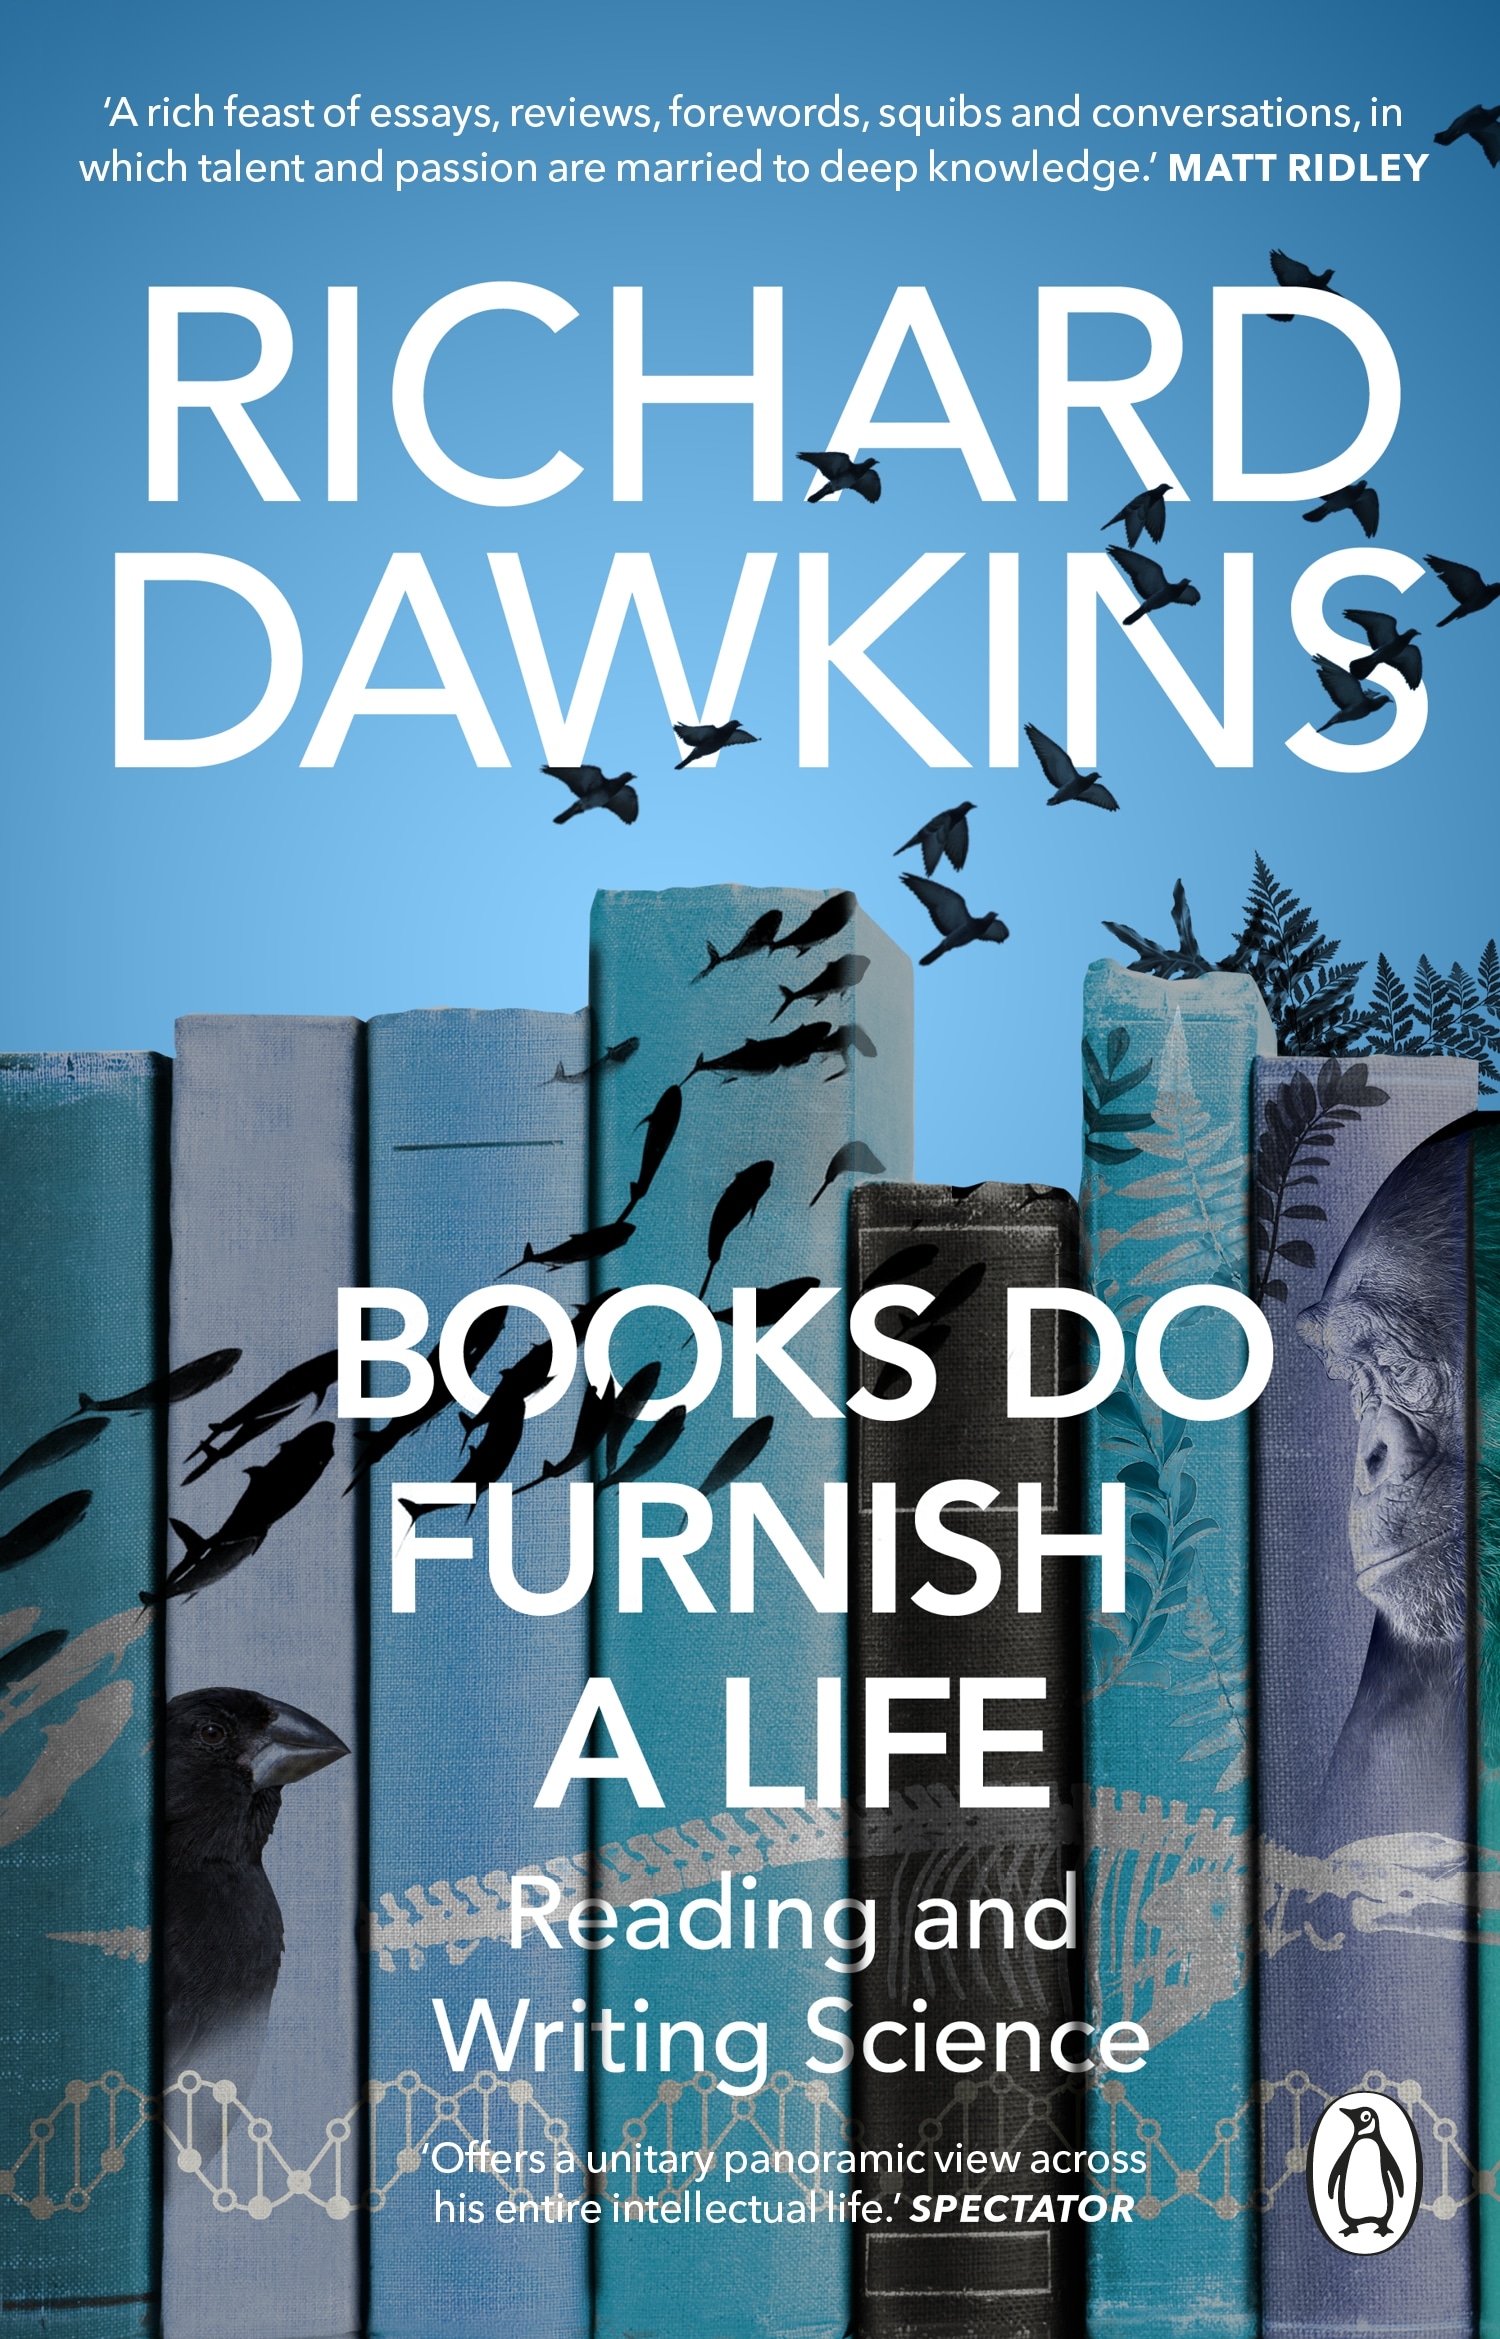 Book “Books do Furnish a Life” by Richard Dawkins — February 10, 2022